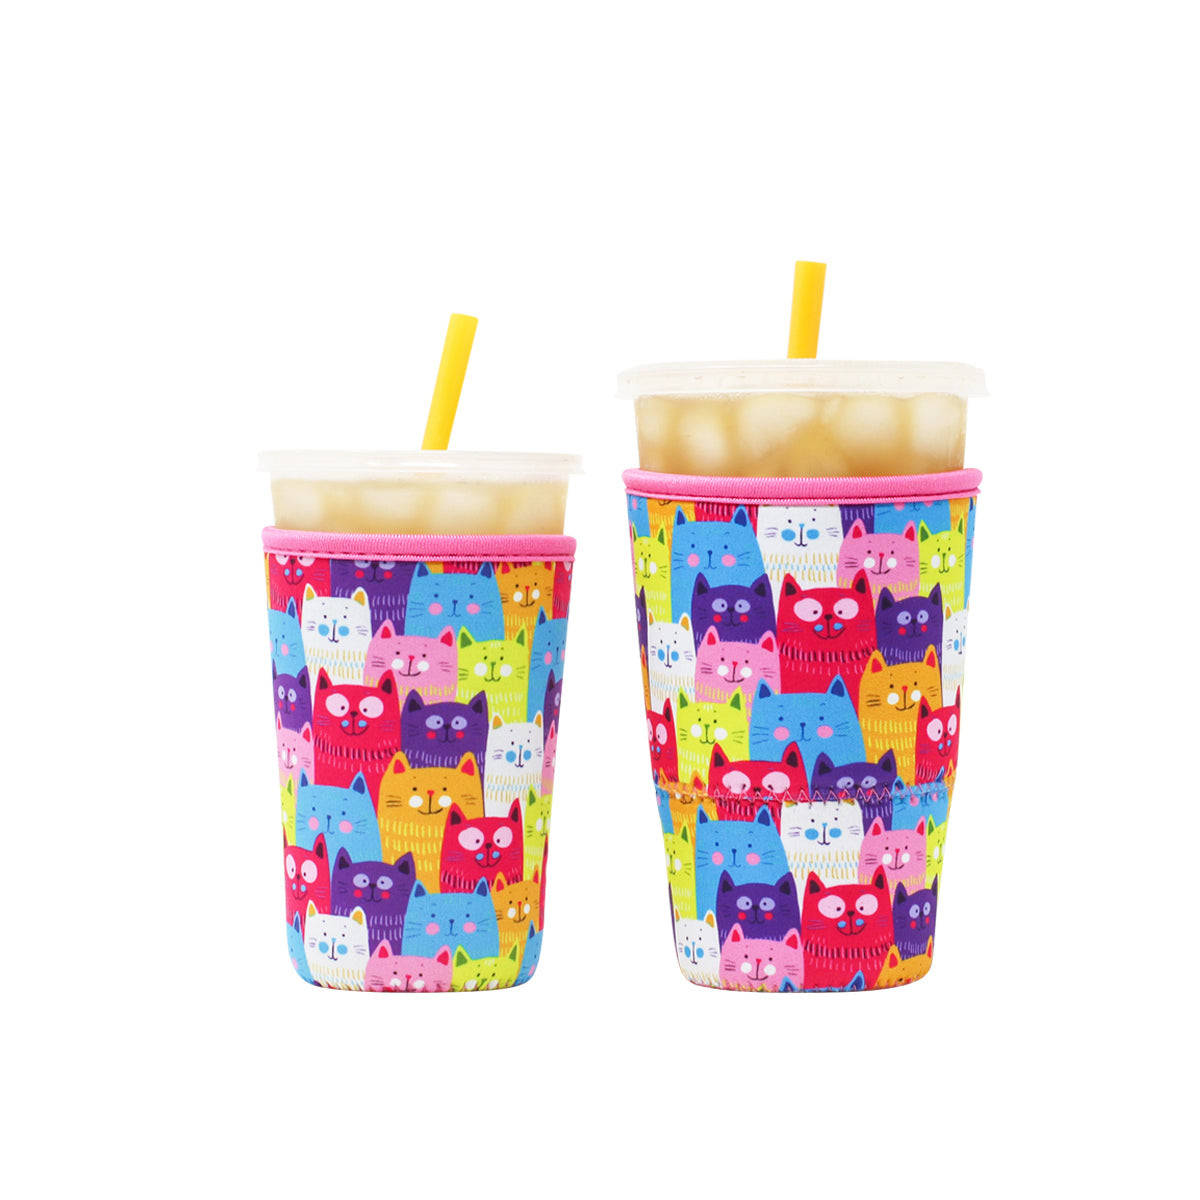 Hot Coffee Insulated Drink Sleeve  Pink Leopard - Brew Buddy Neoprene –  shopbrewbuddy